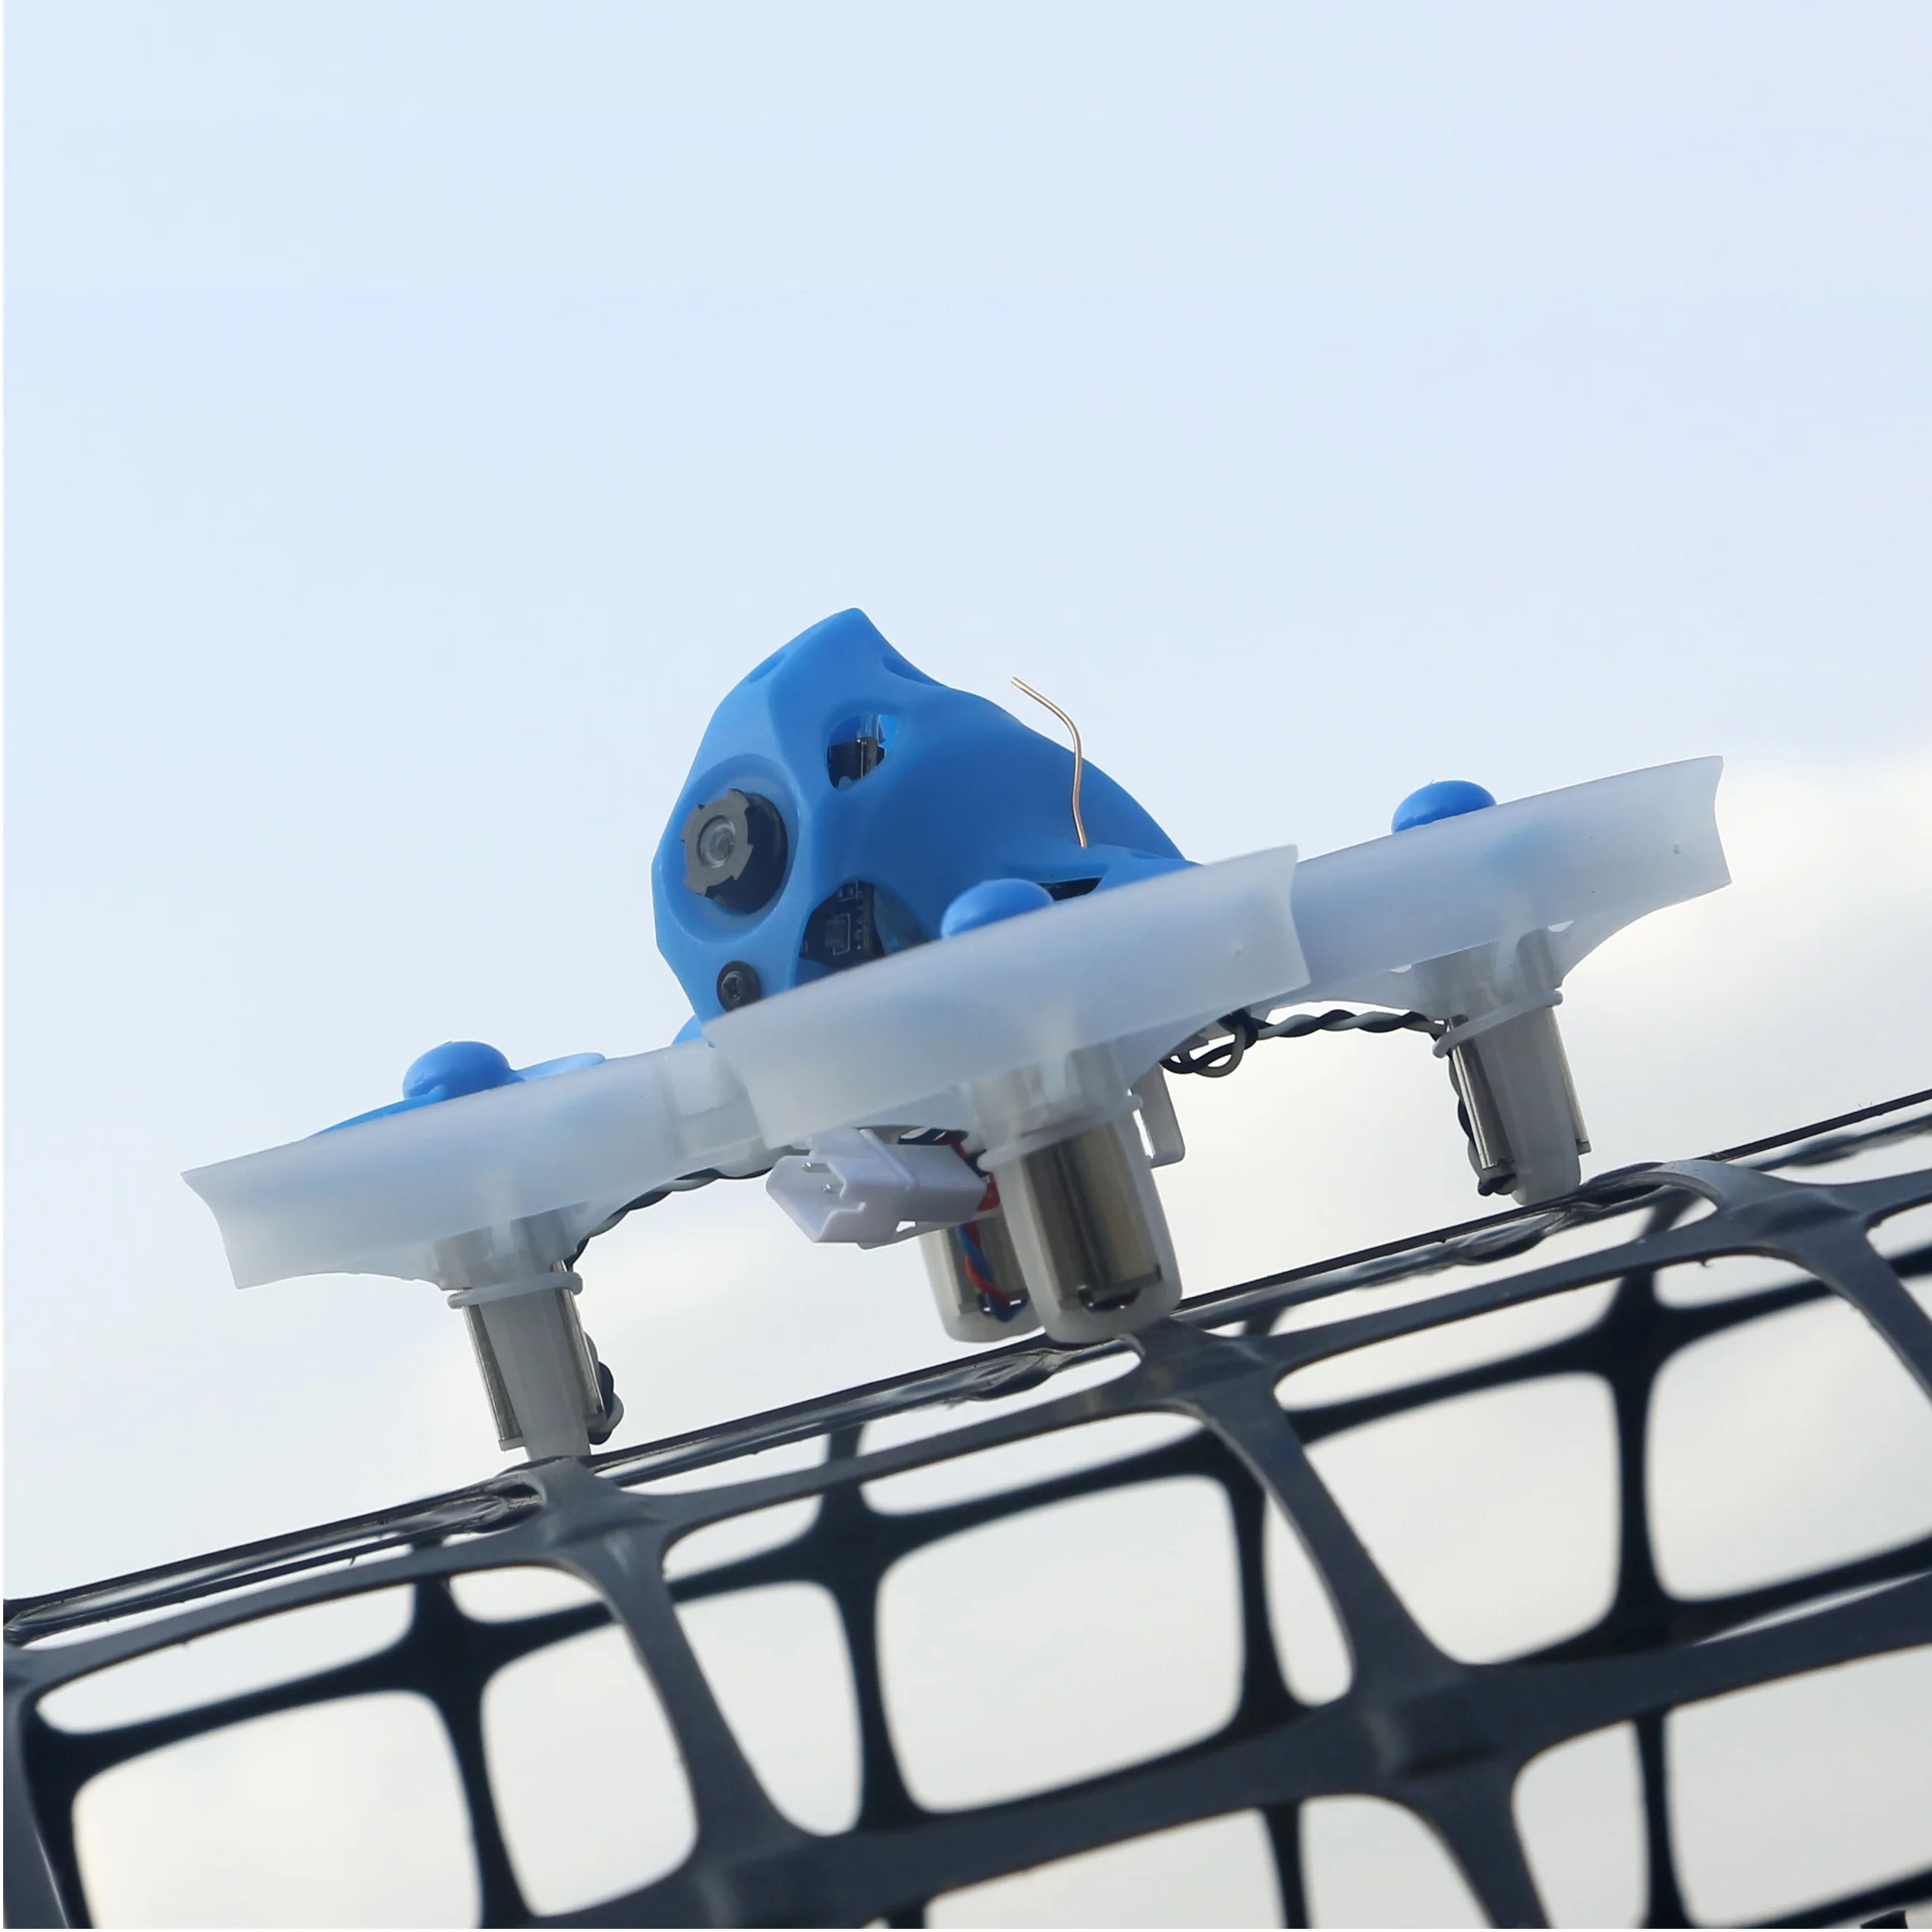 Ldarc tiny 6xs 7xs 1s fpv racing indoor brushed micro whoop drone |  初心者とトレーニングに適しています